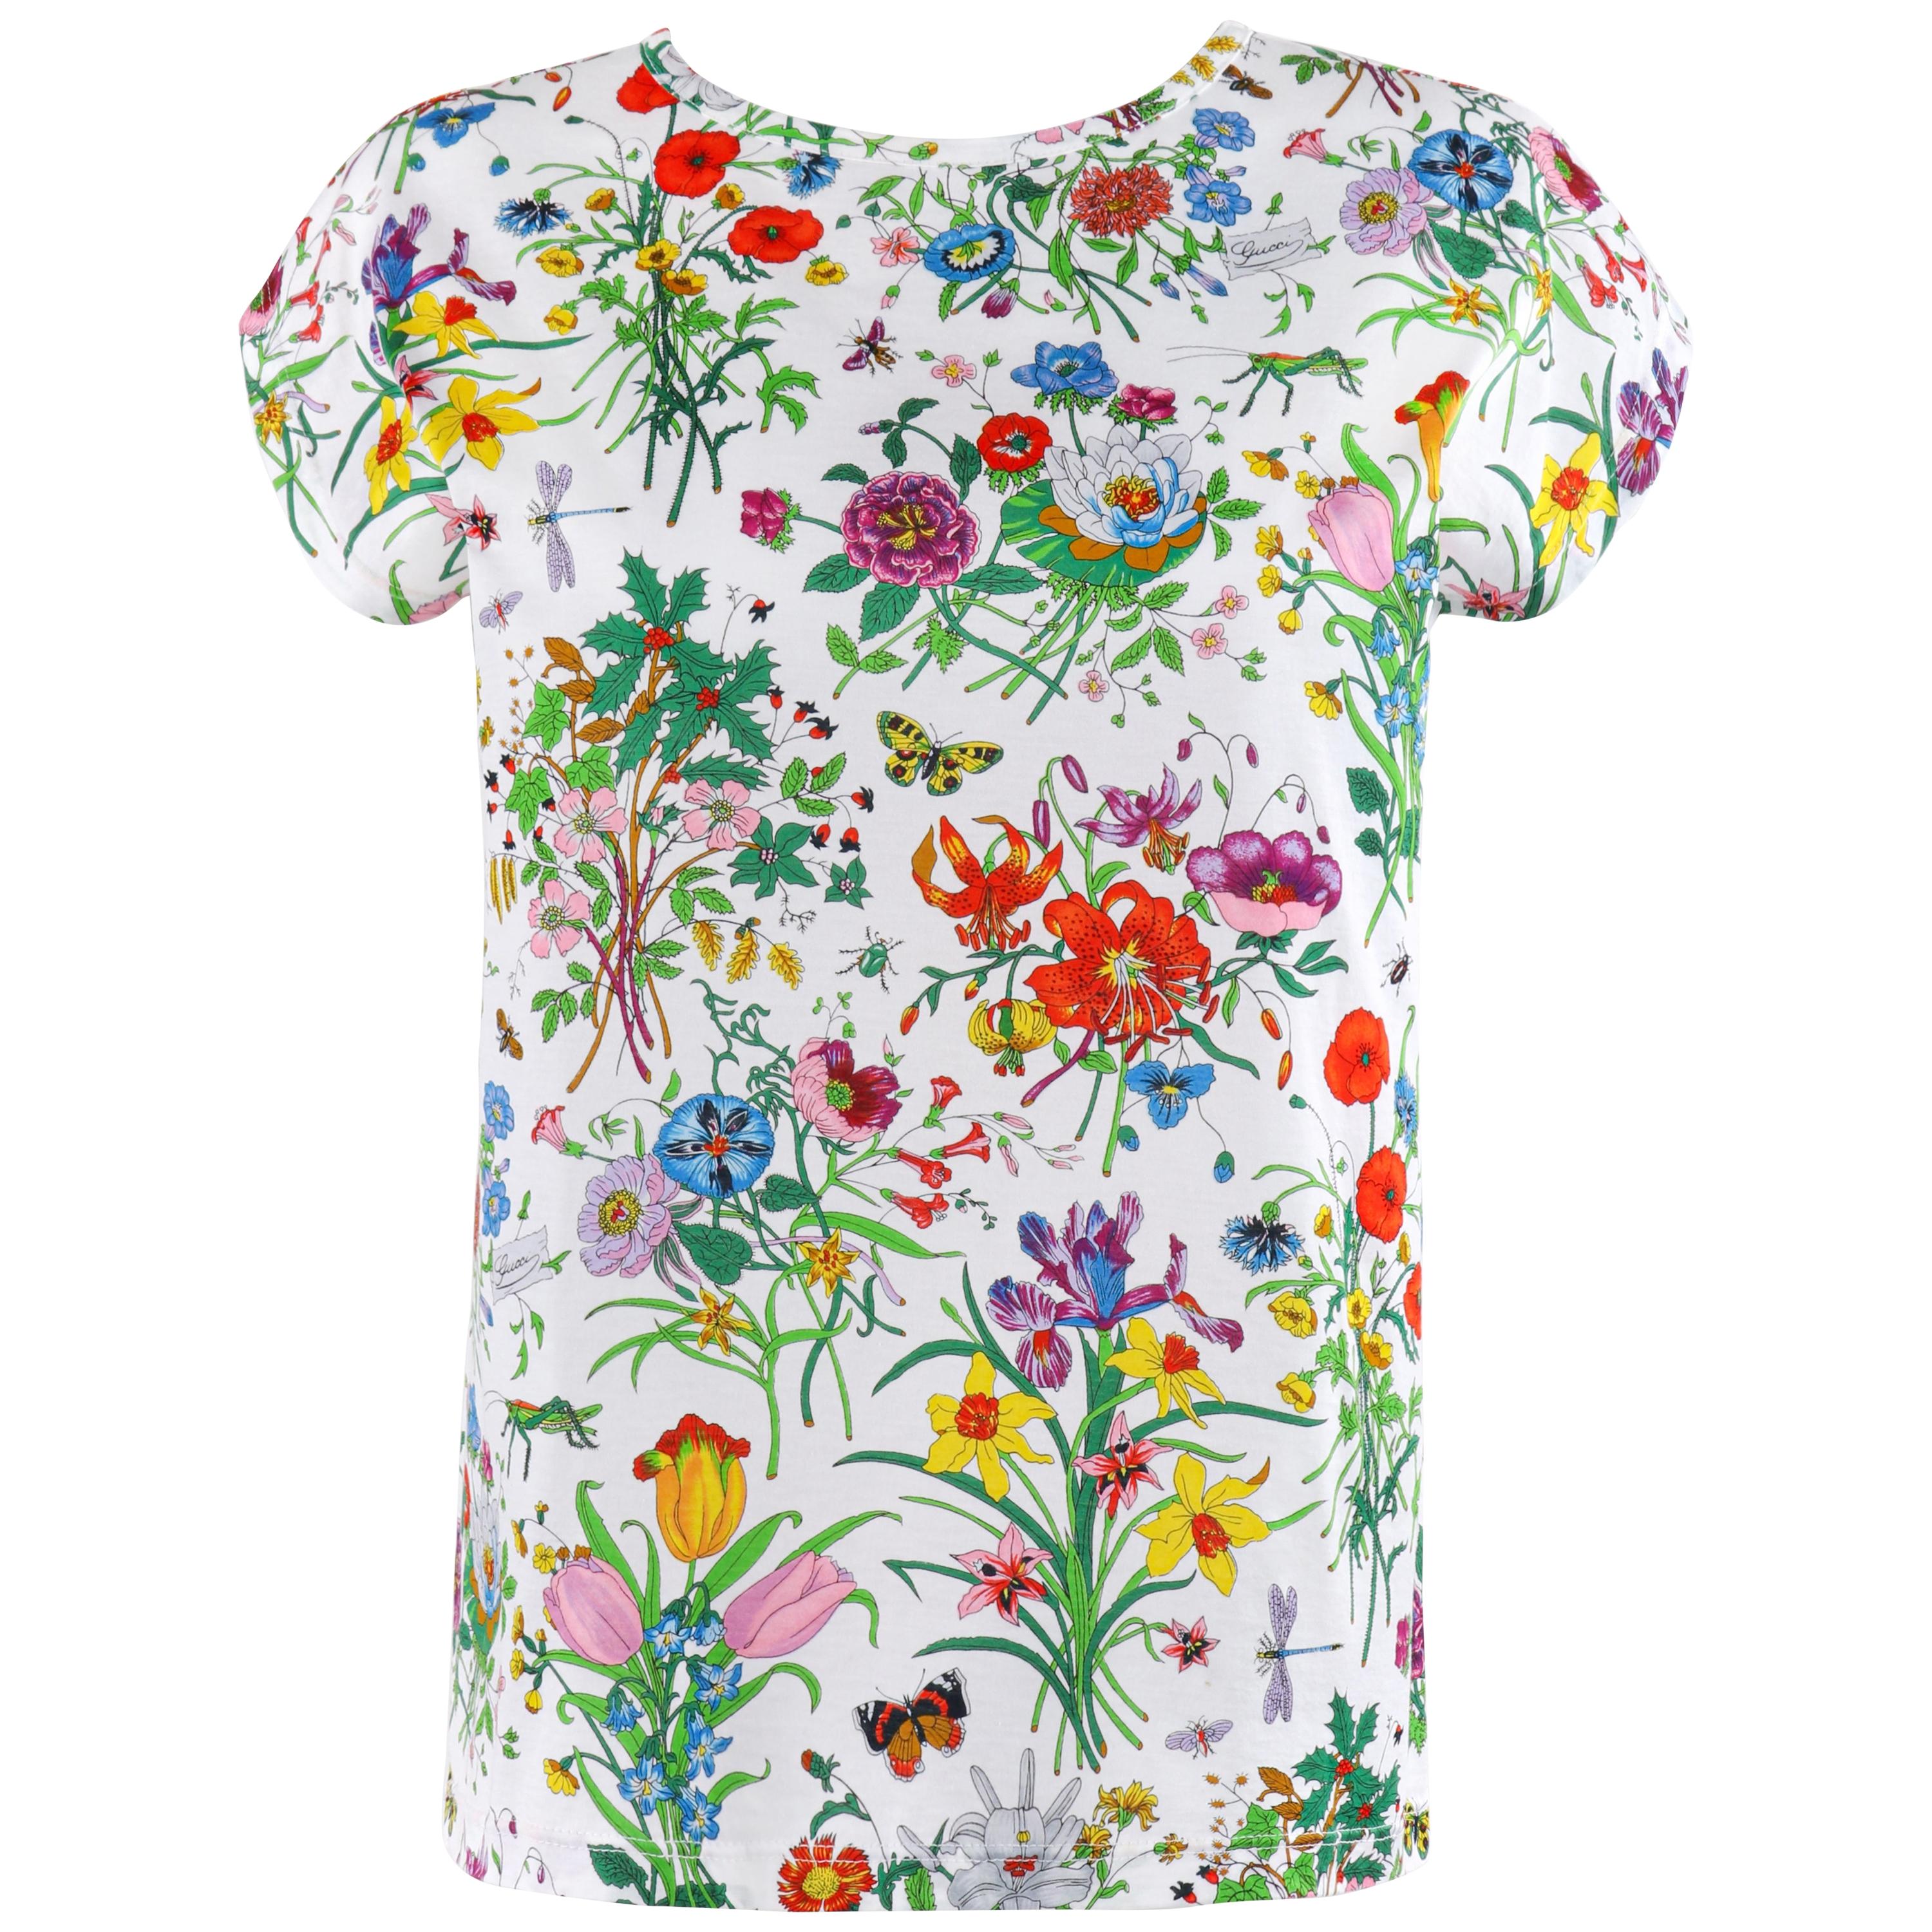 GUCCI c.1970s Vittorio Accornero "Flora" Print Floral Wildflower T-Shirt Top